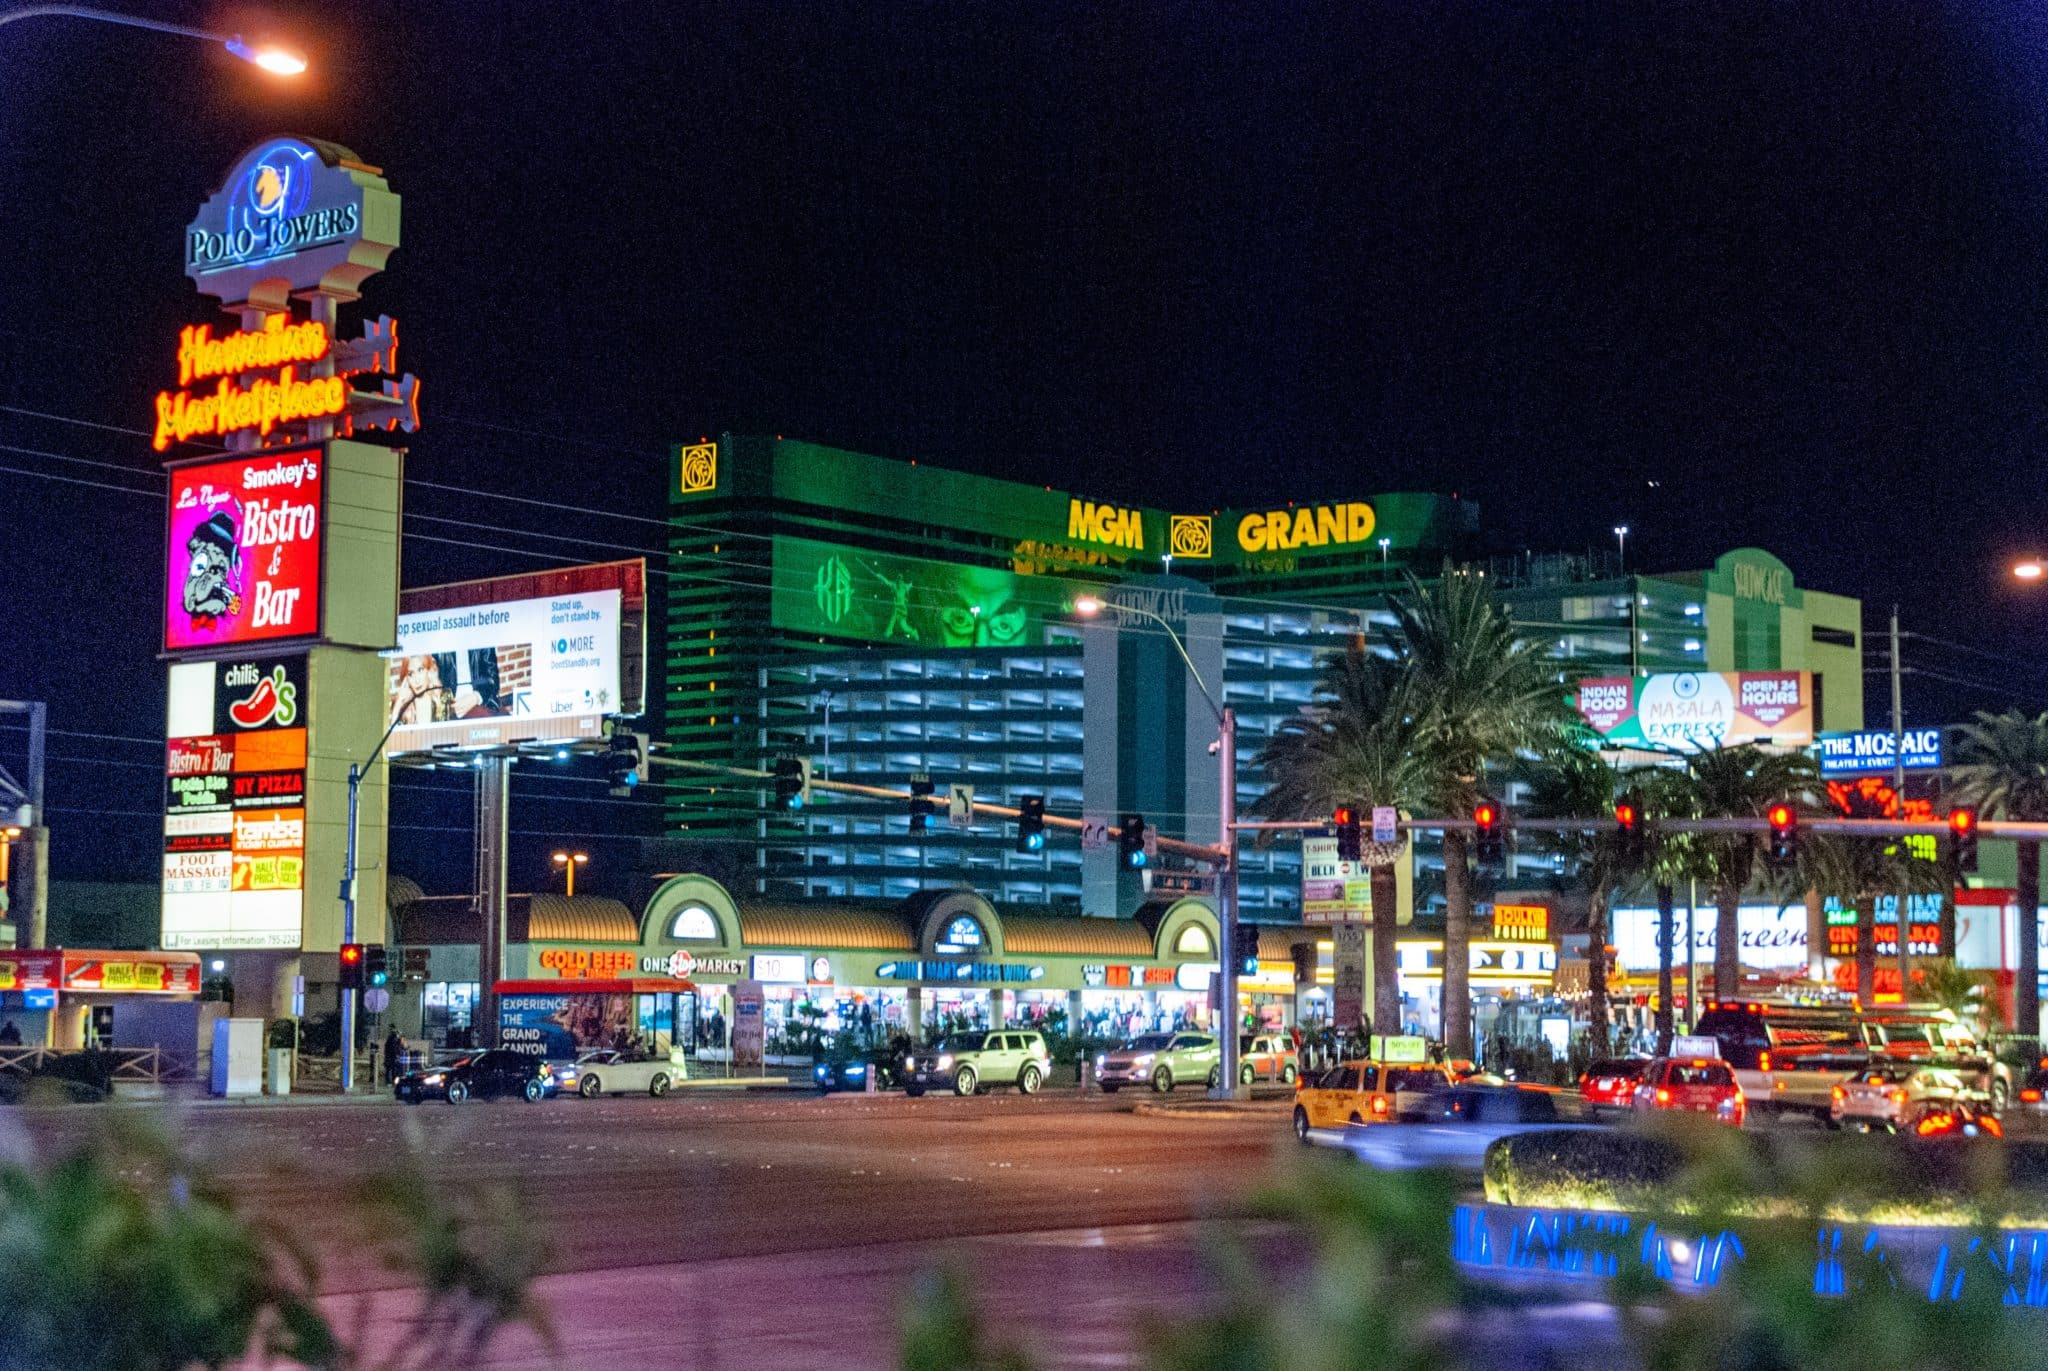 MGM Grand Las Vegas at night.